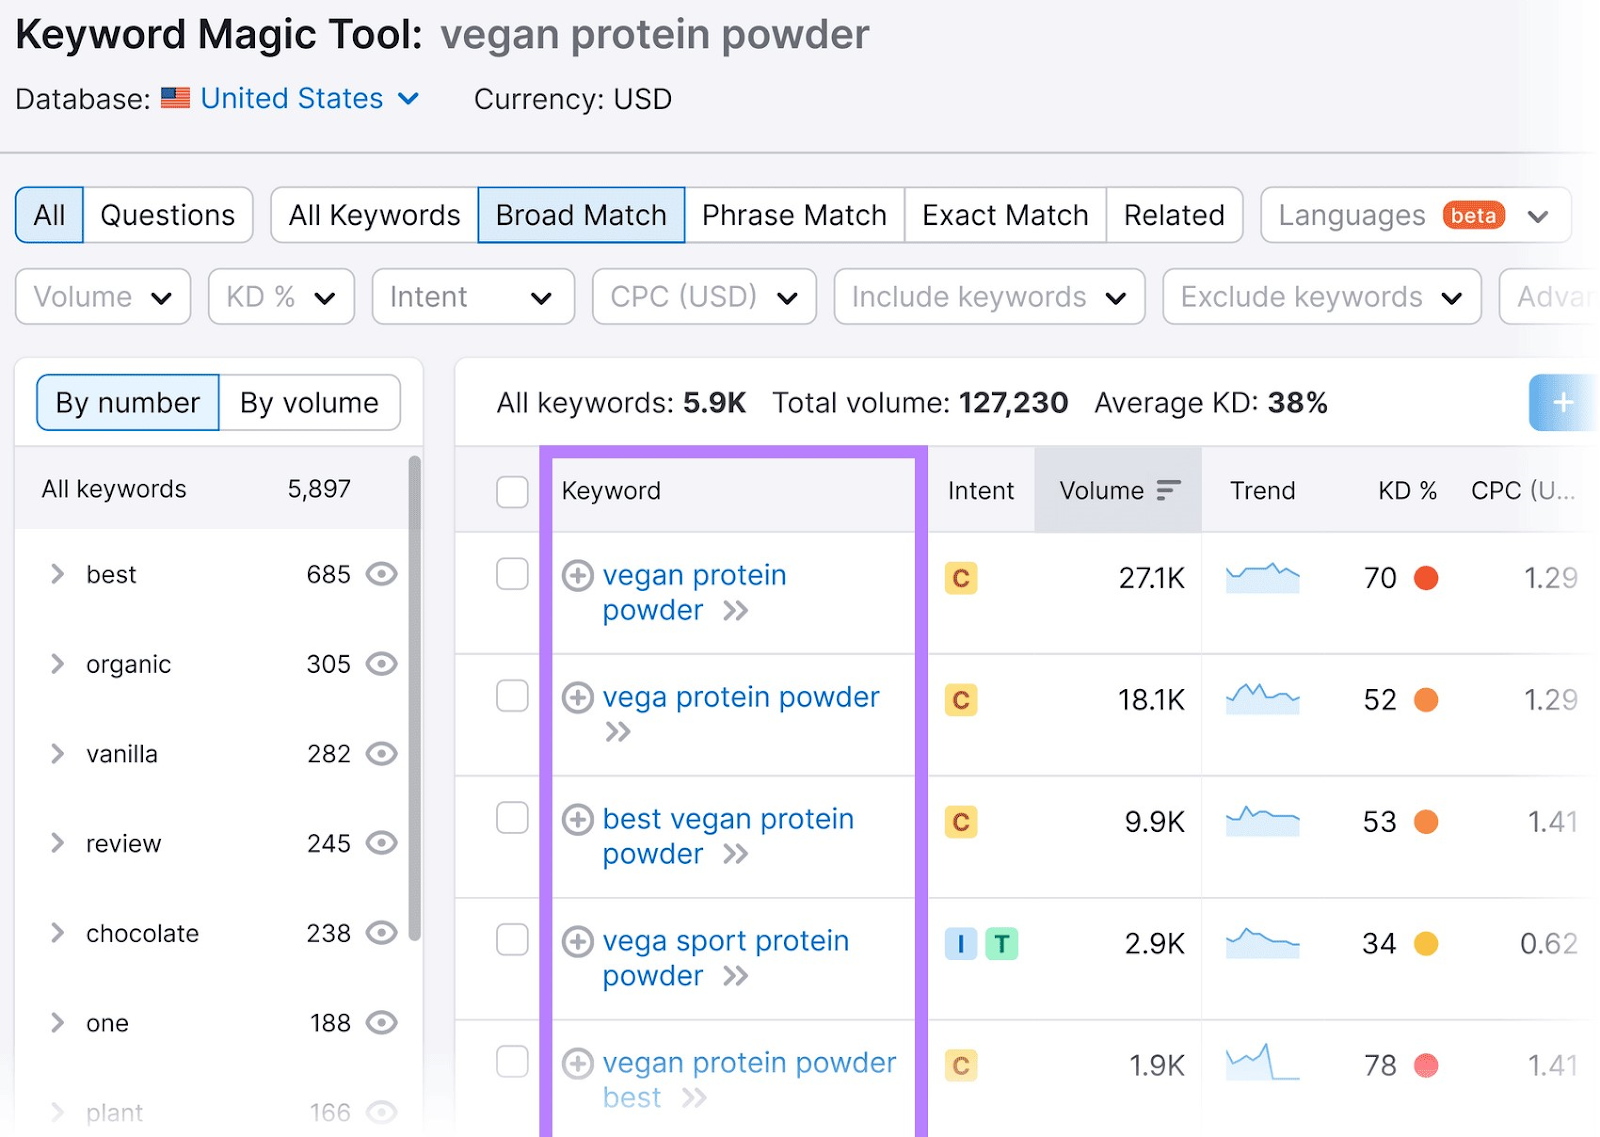 Keyword Magic Tool results for "vegan protein powder"